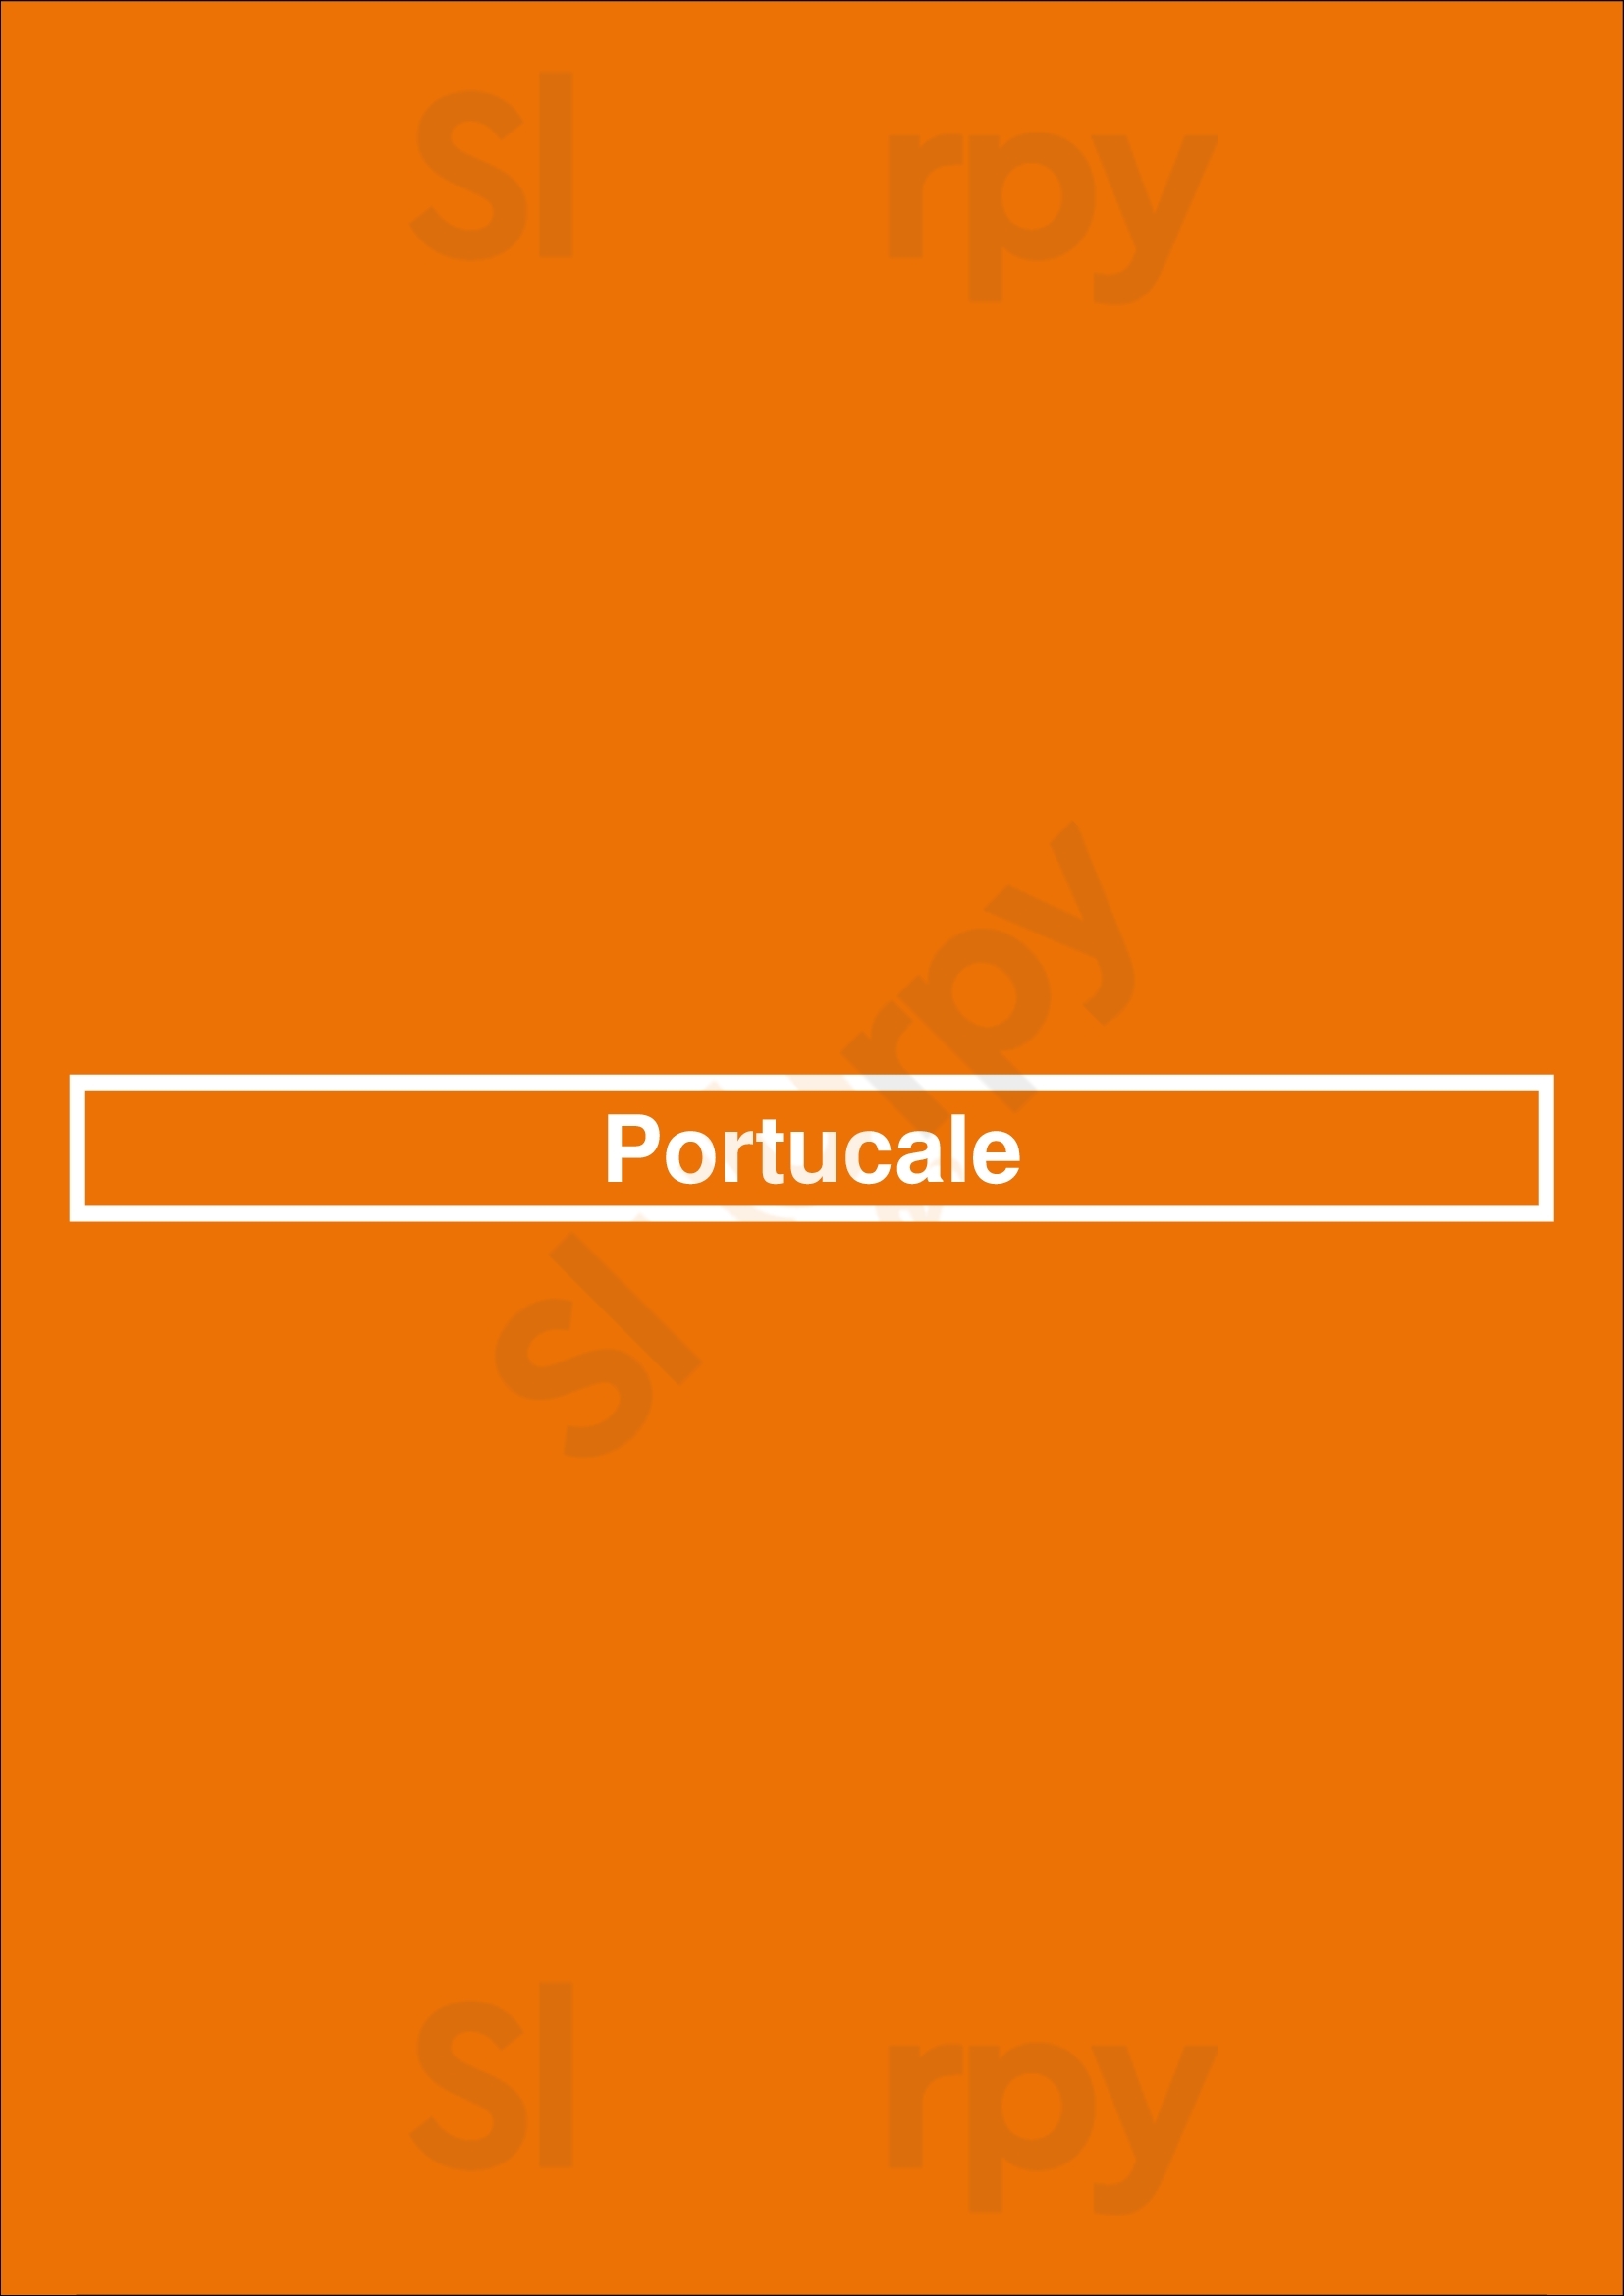 Portucale Porto Menu - 1